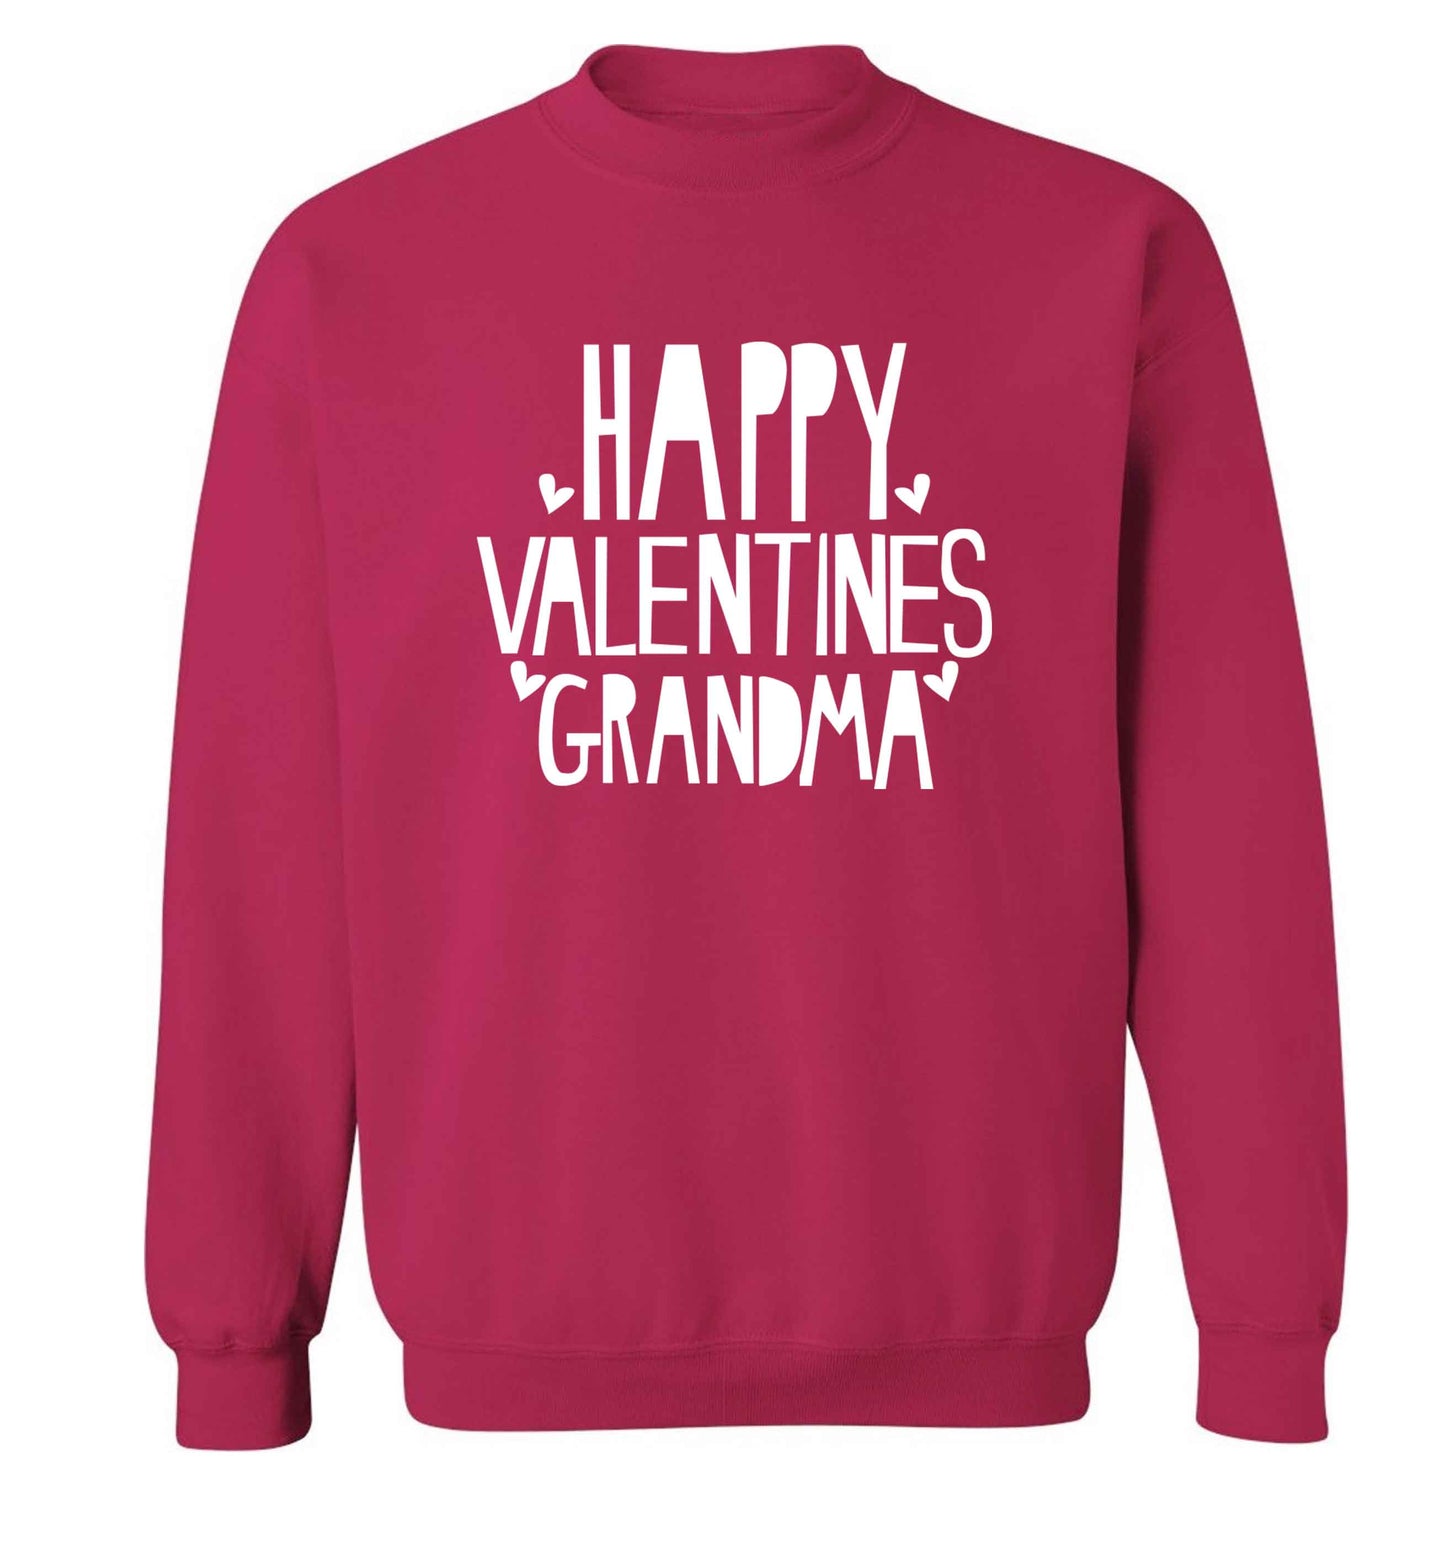 Happy valentines grandma adult's unisex pink sweater 2XL